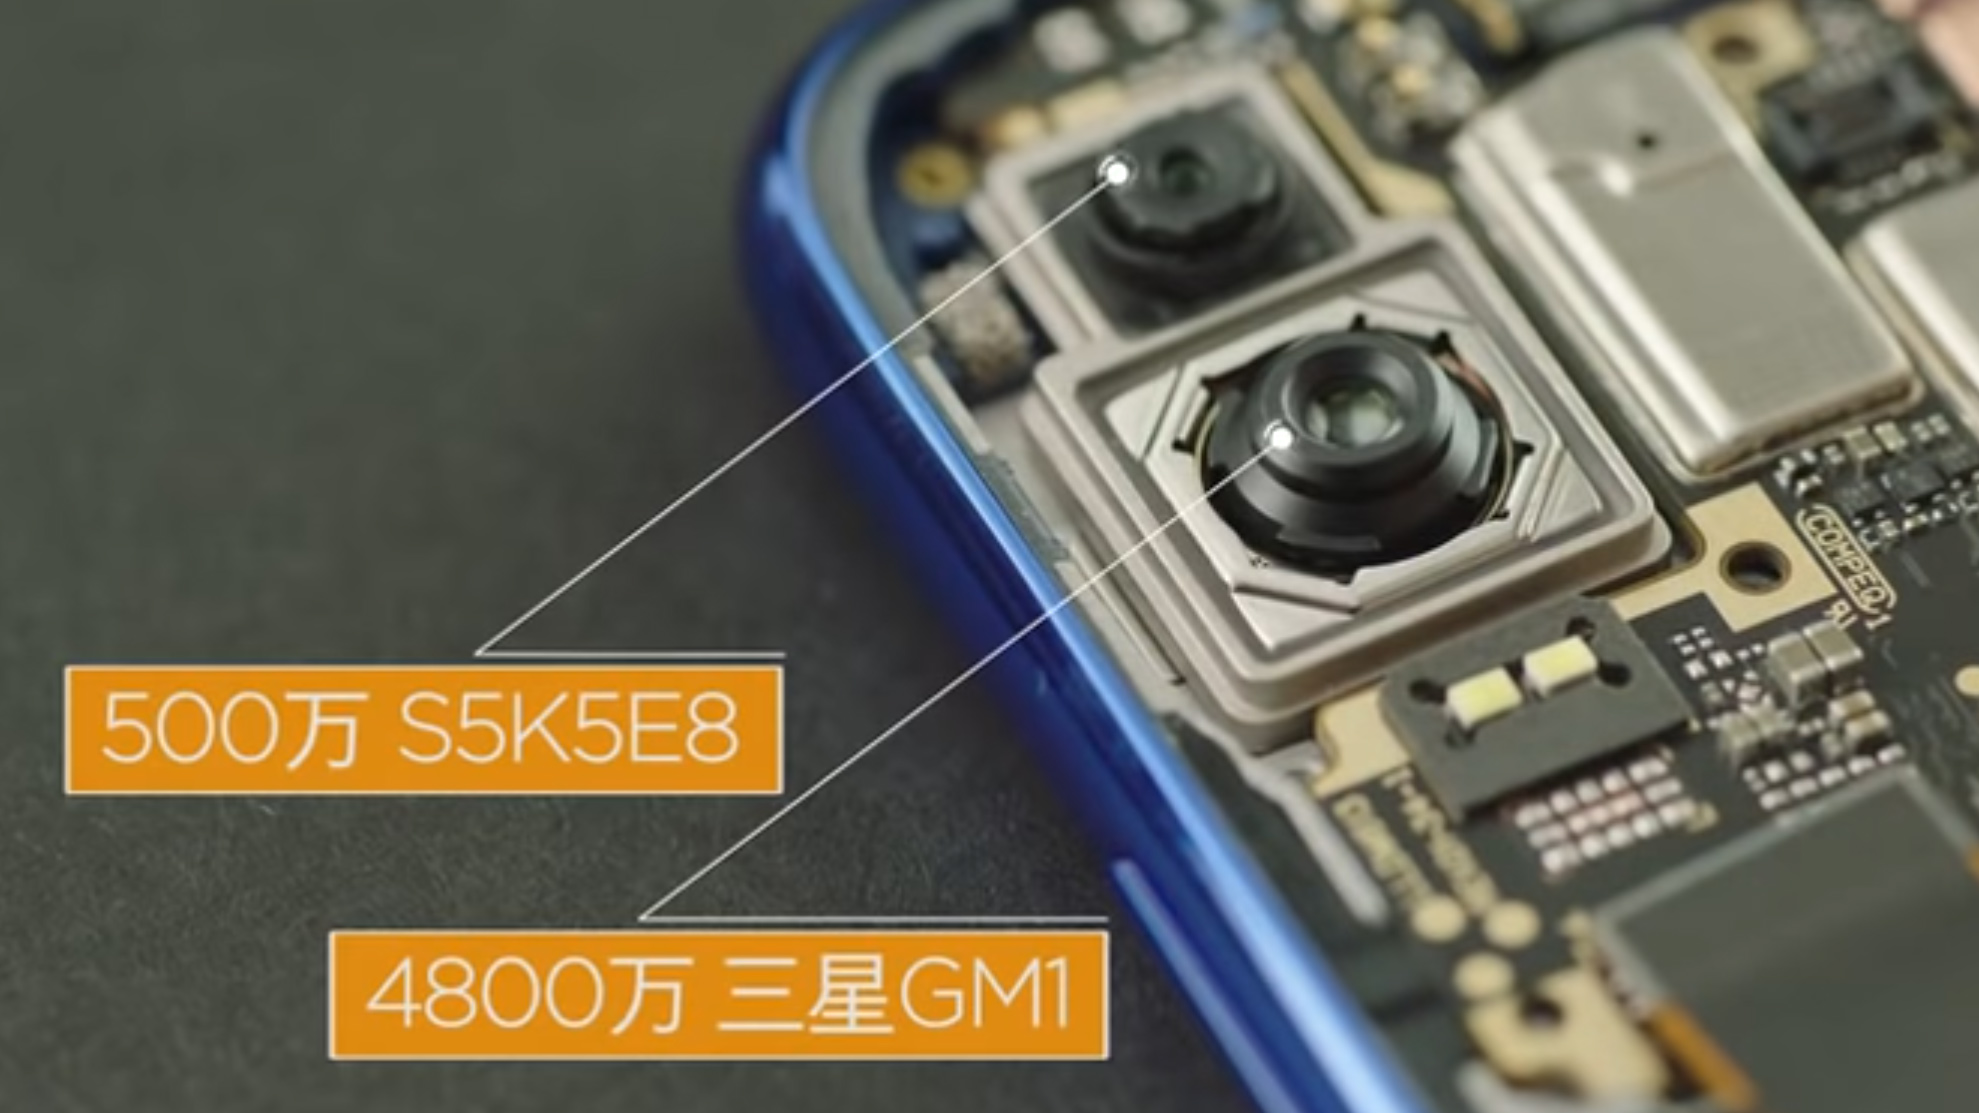 Xiaomi note 7 аккумулятор. Камера для редми ноут 7. Задняя камера на редми ноут 7. Redmi Note 7 фронтальная камера. Redmi 7 Disassembly.